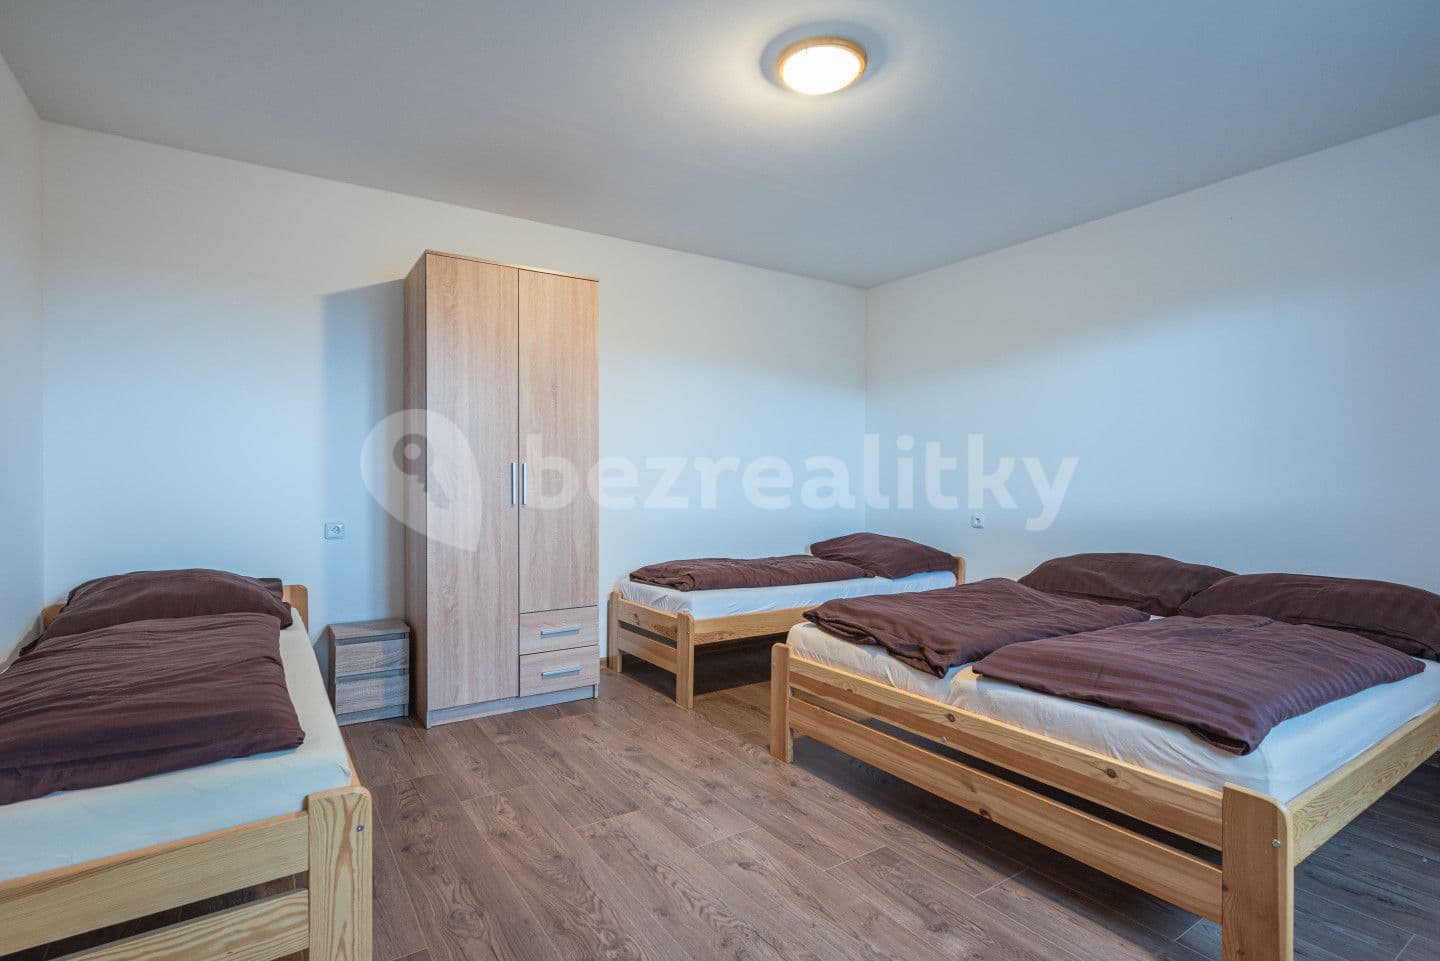 Predaj bytu 2-izbový 40 m², Staré Město, Moravskoslezský kraj